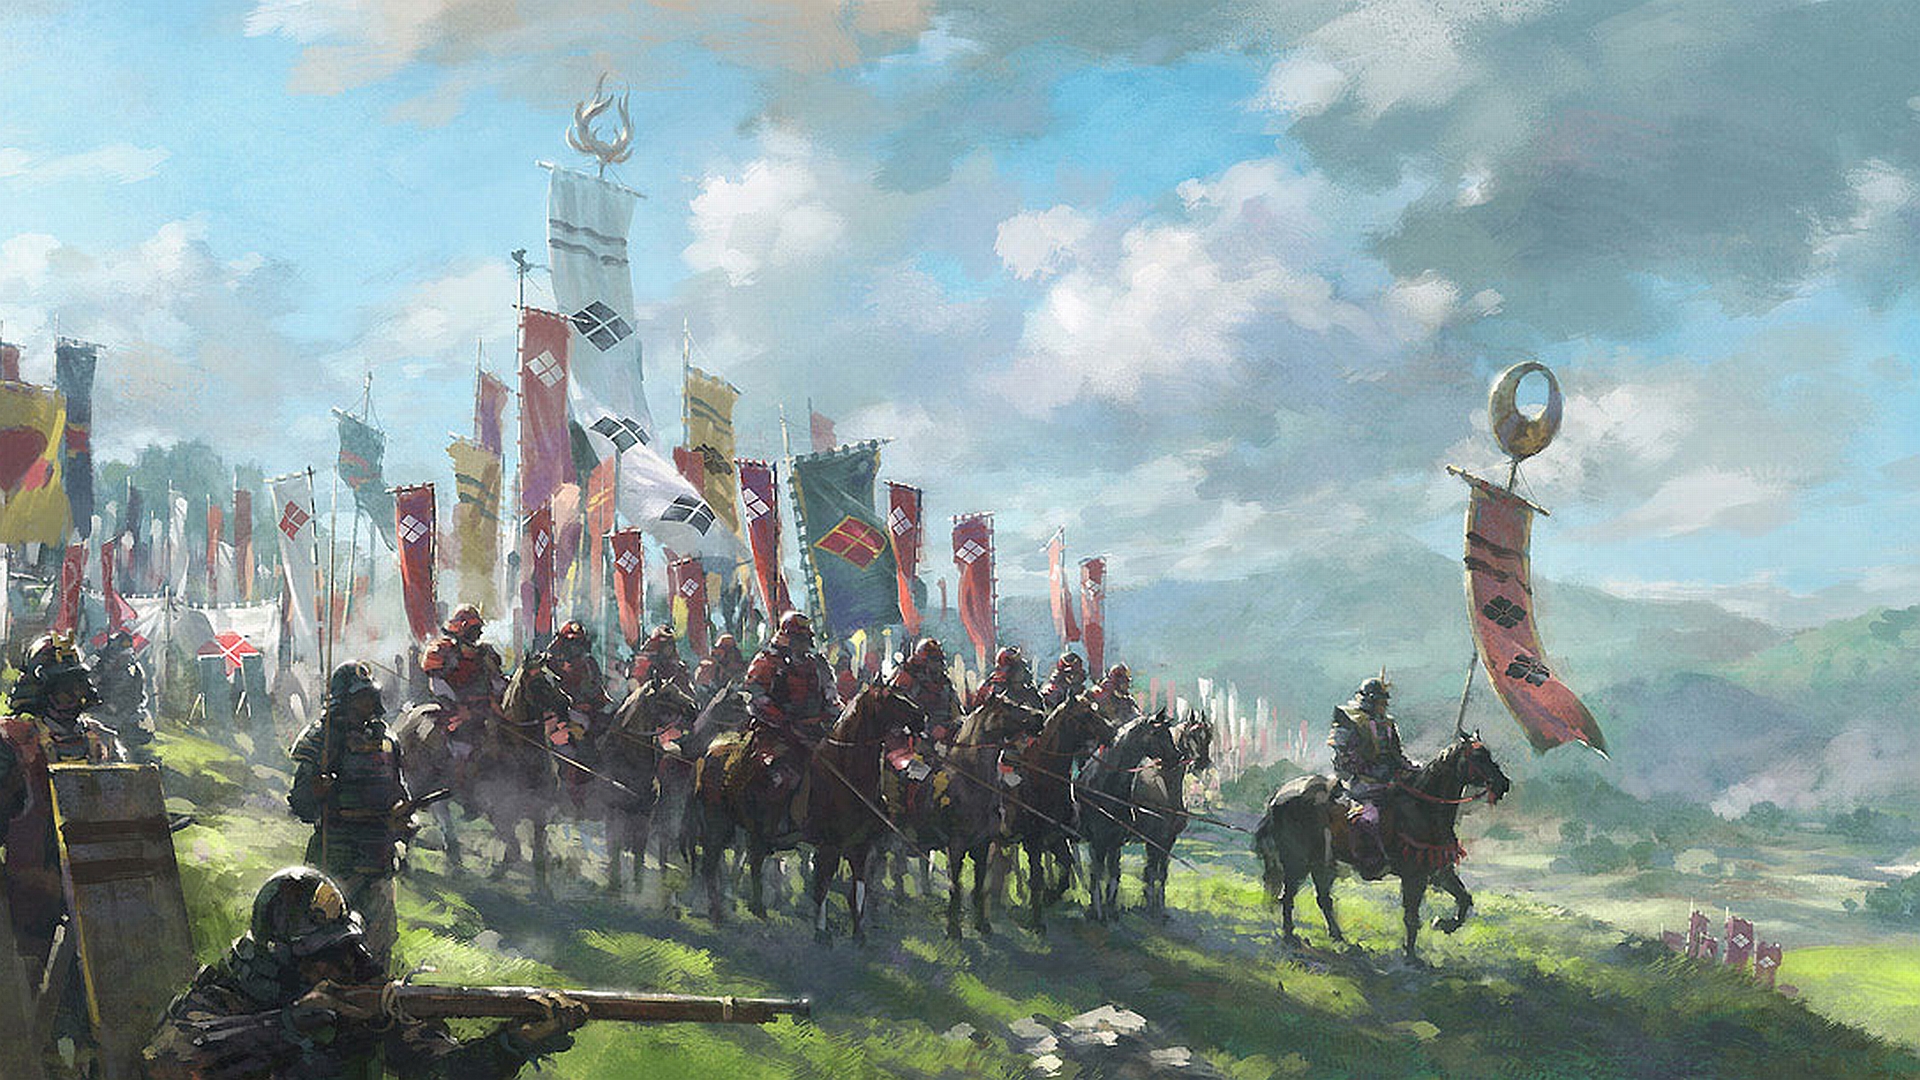 Fantasy samurai warrior standing against a scenic backdrop in this captivating desktop wallpaper.